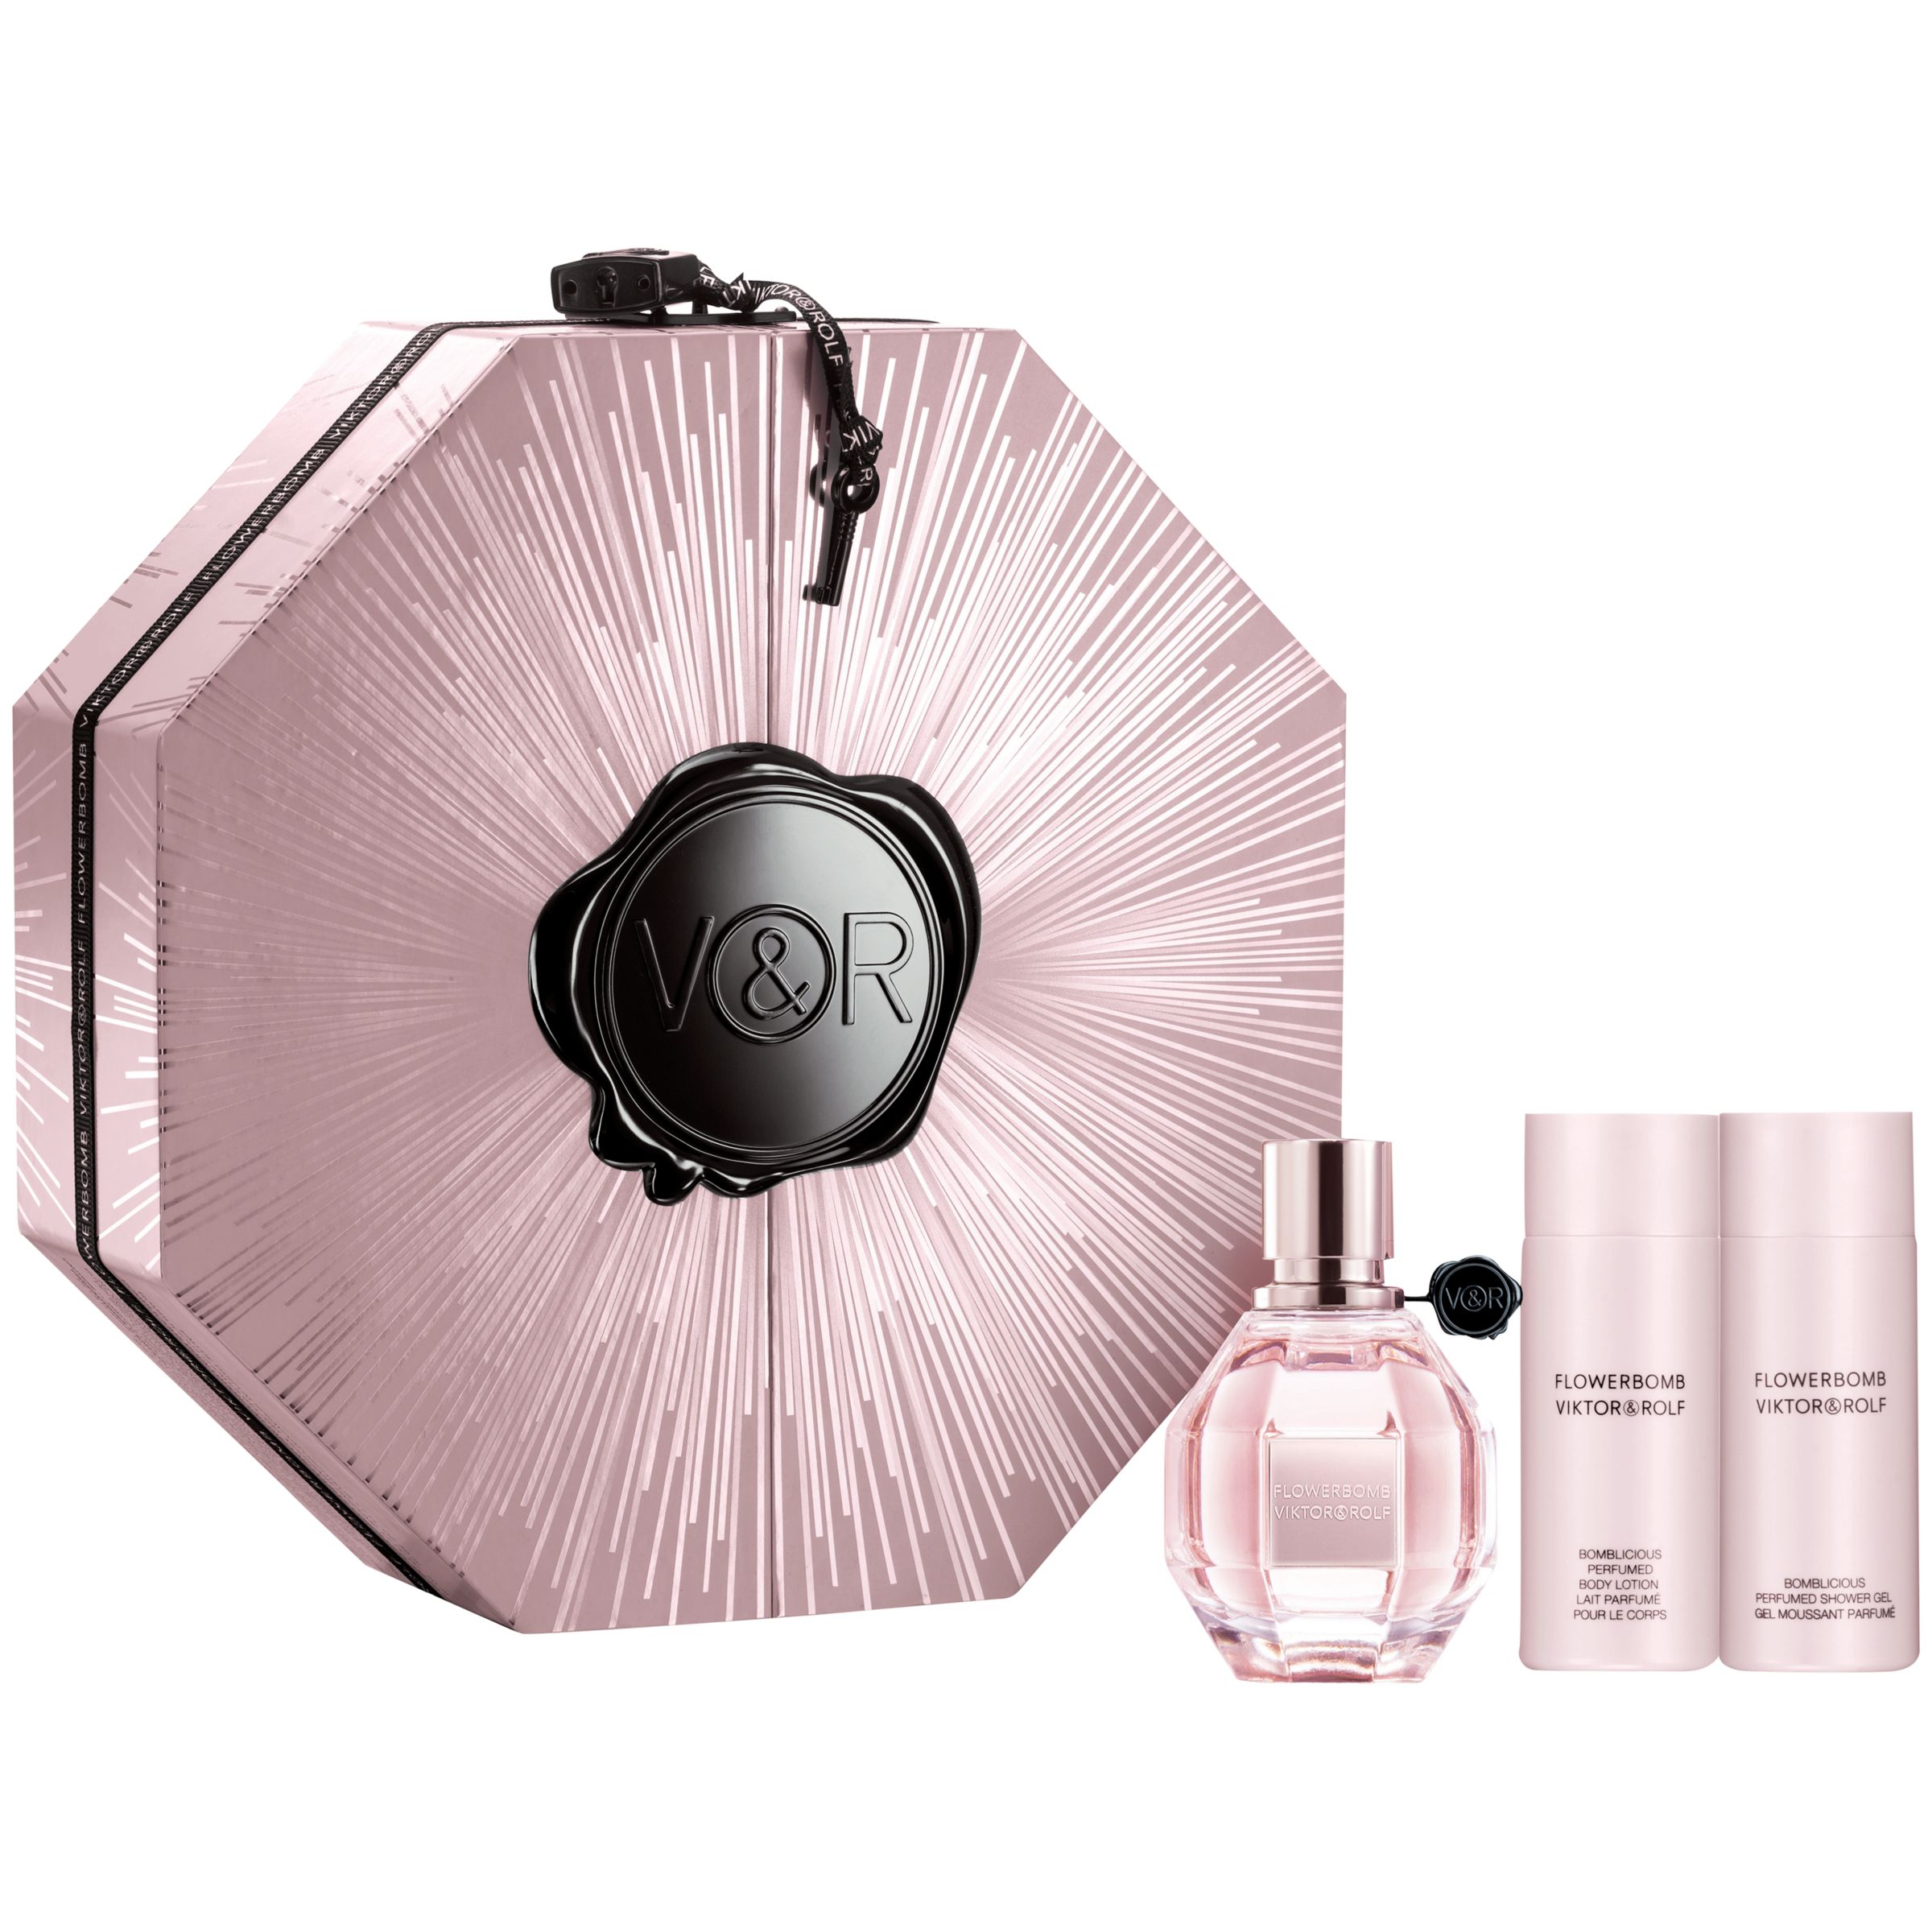 Viktor Rolf Flowerbomb 50ml Eau De Parfum Fragrance Gift Set At John Lewis Partners